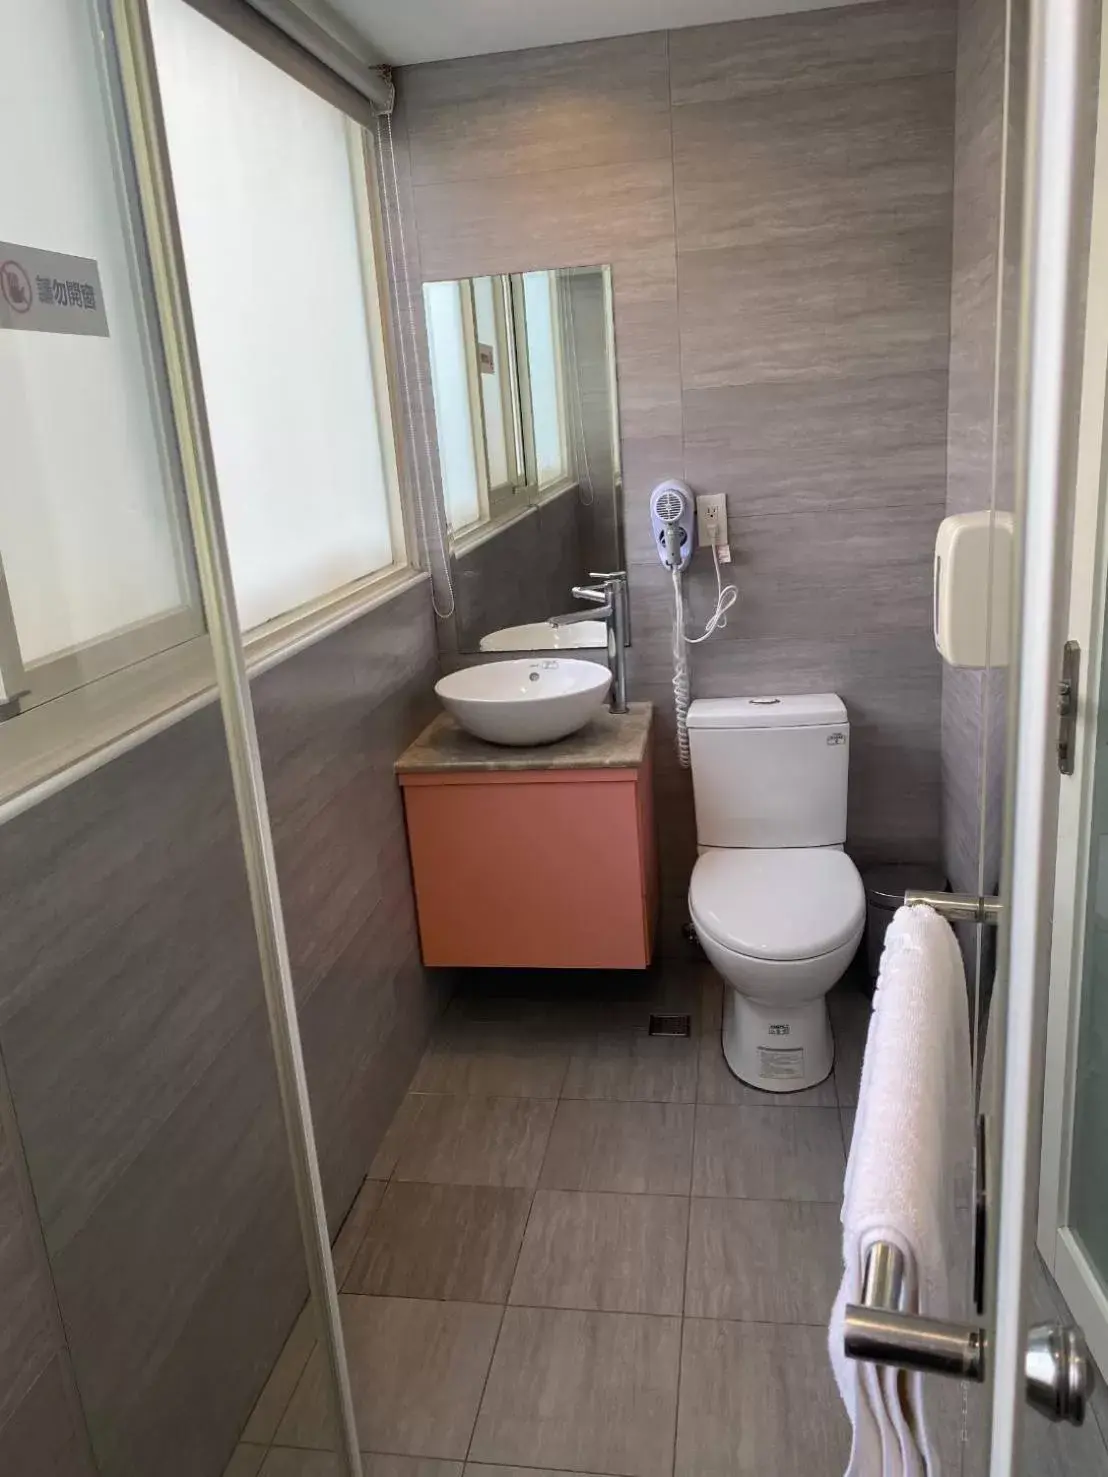 Bathroom in Xinshe Hotel - Hsinchu